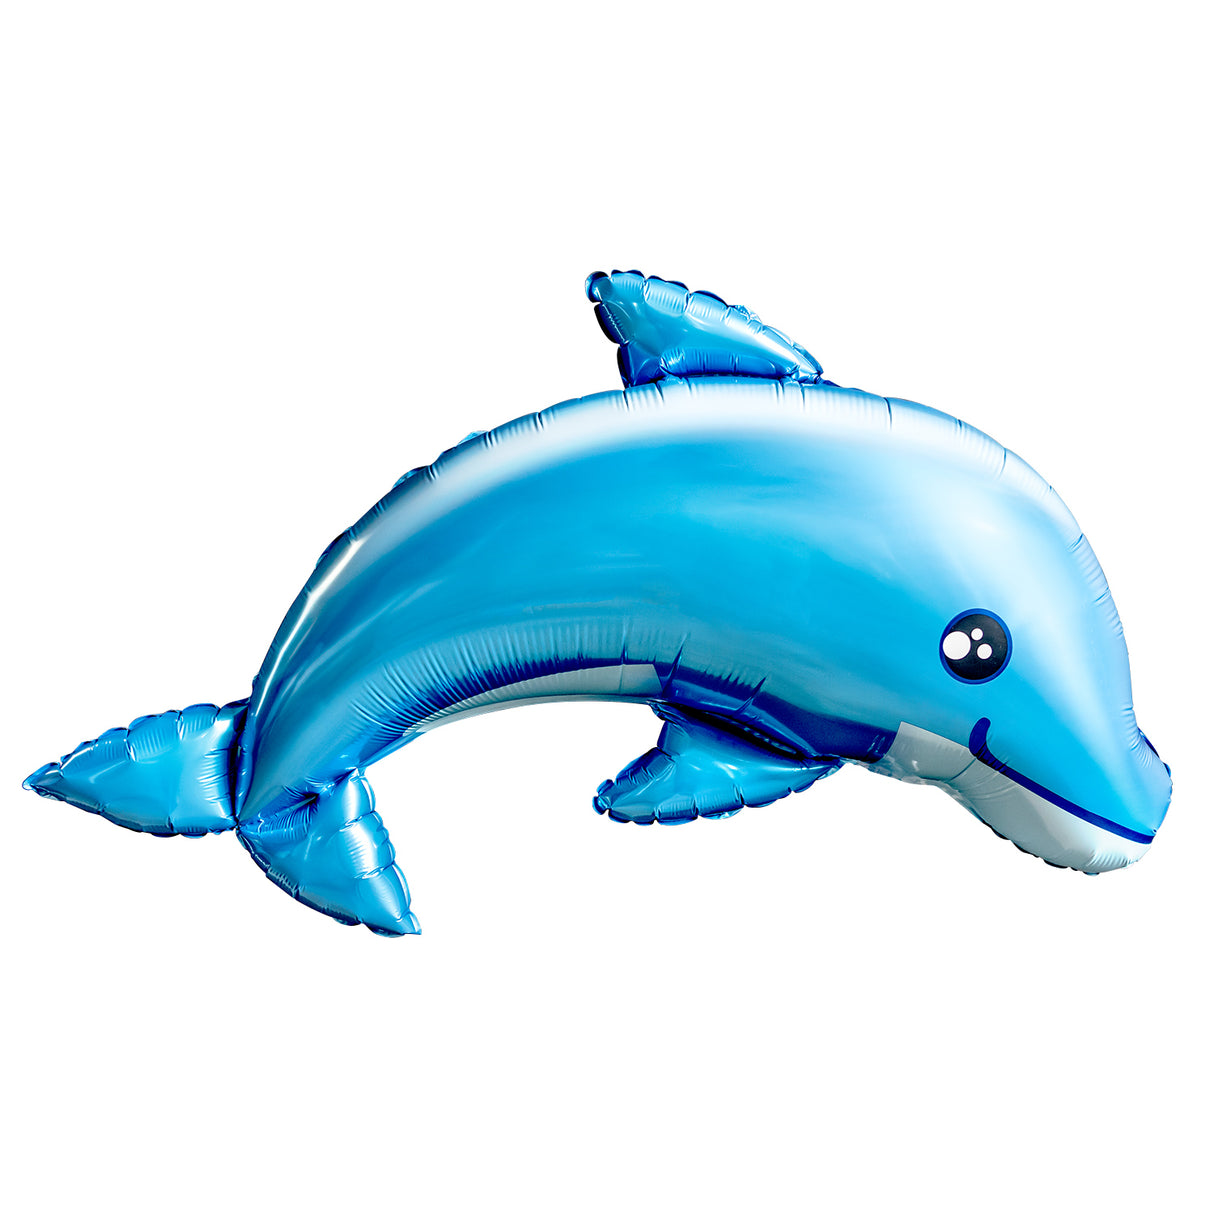 Delfiini sininen muotofolio